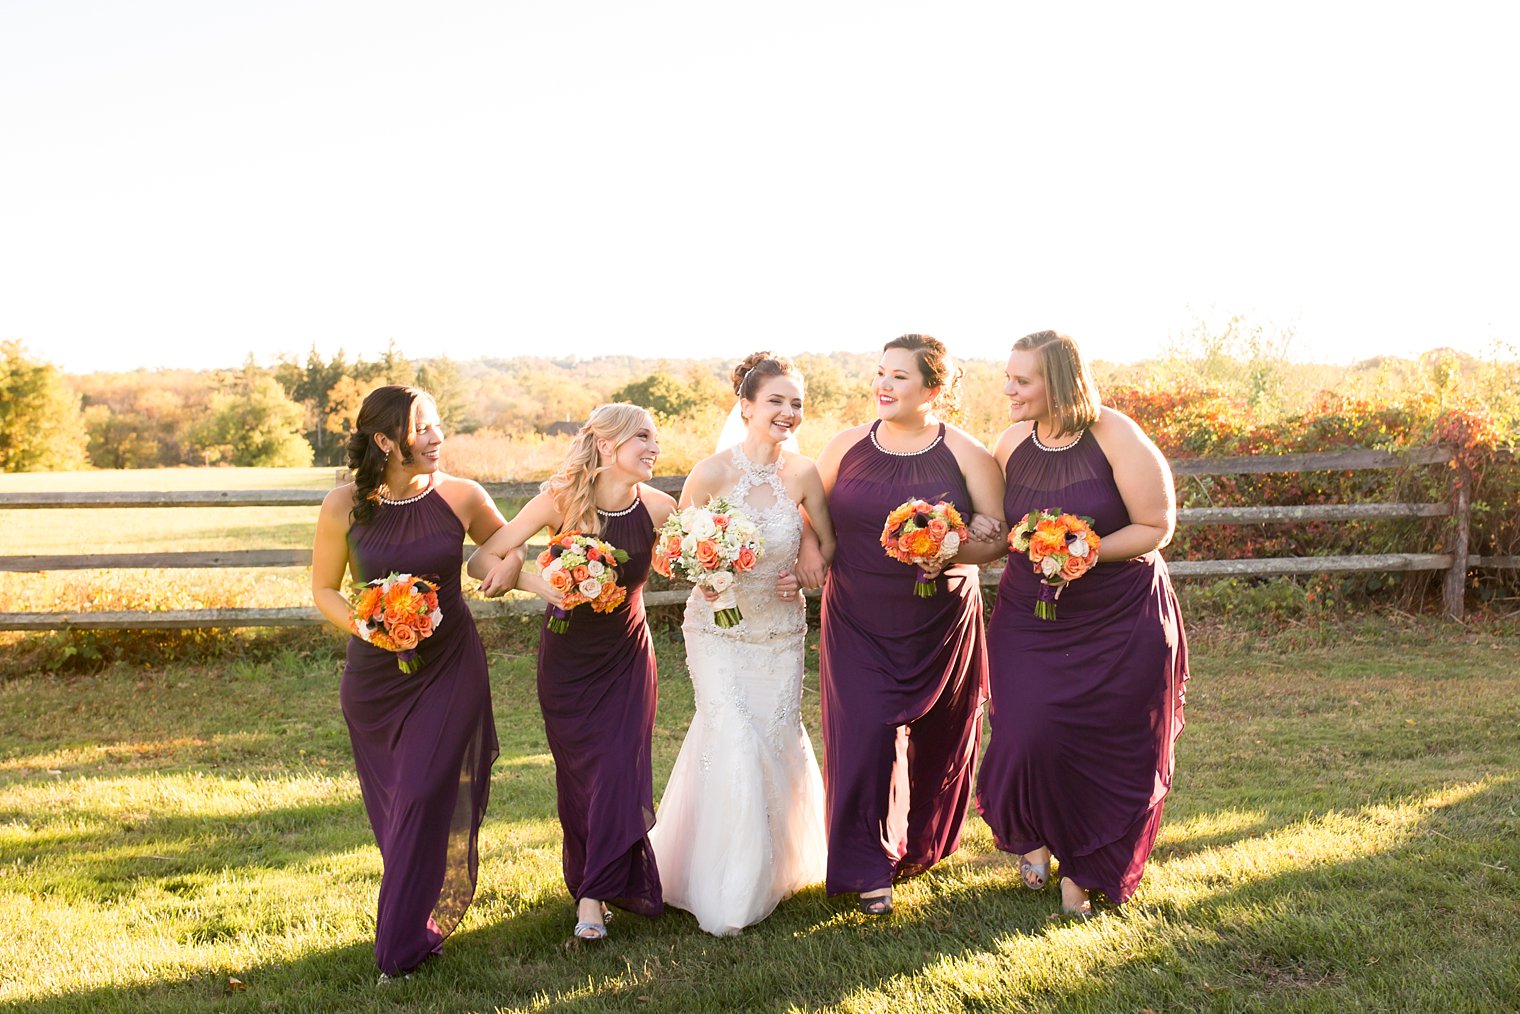 Basking Ridge Country Club bridesmaids in purple dresses photo